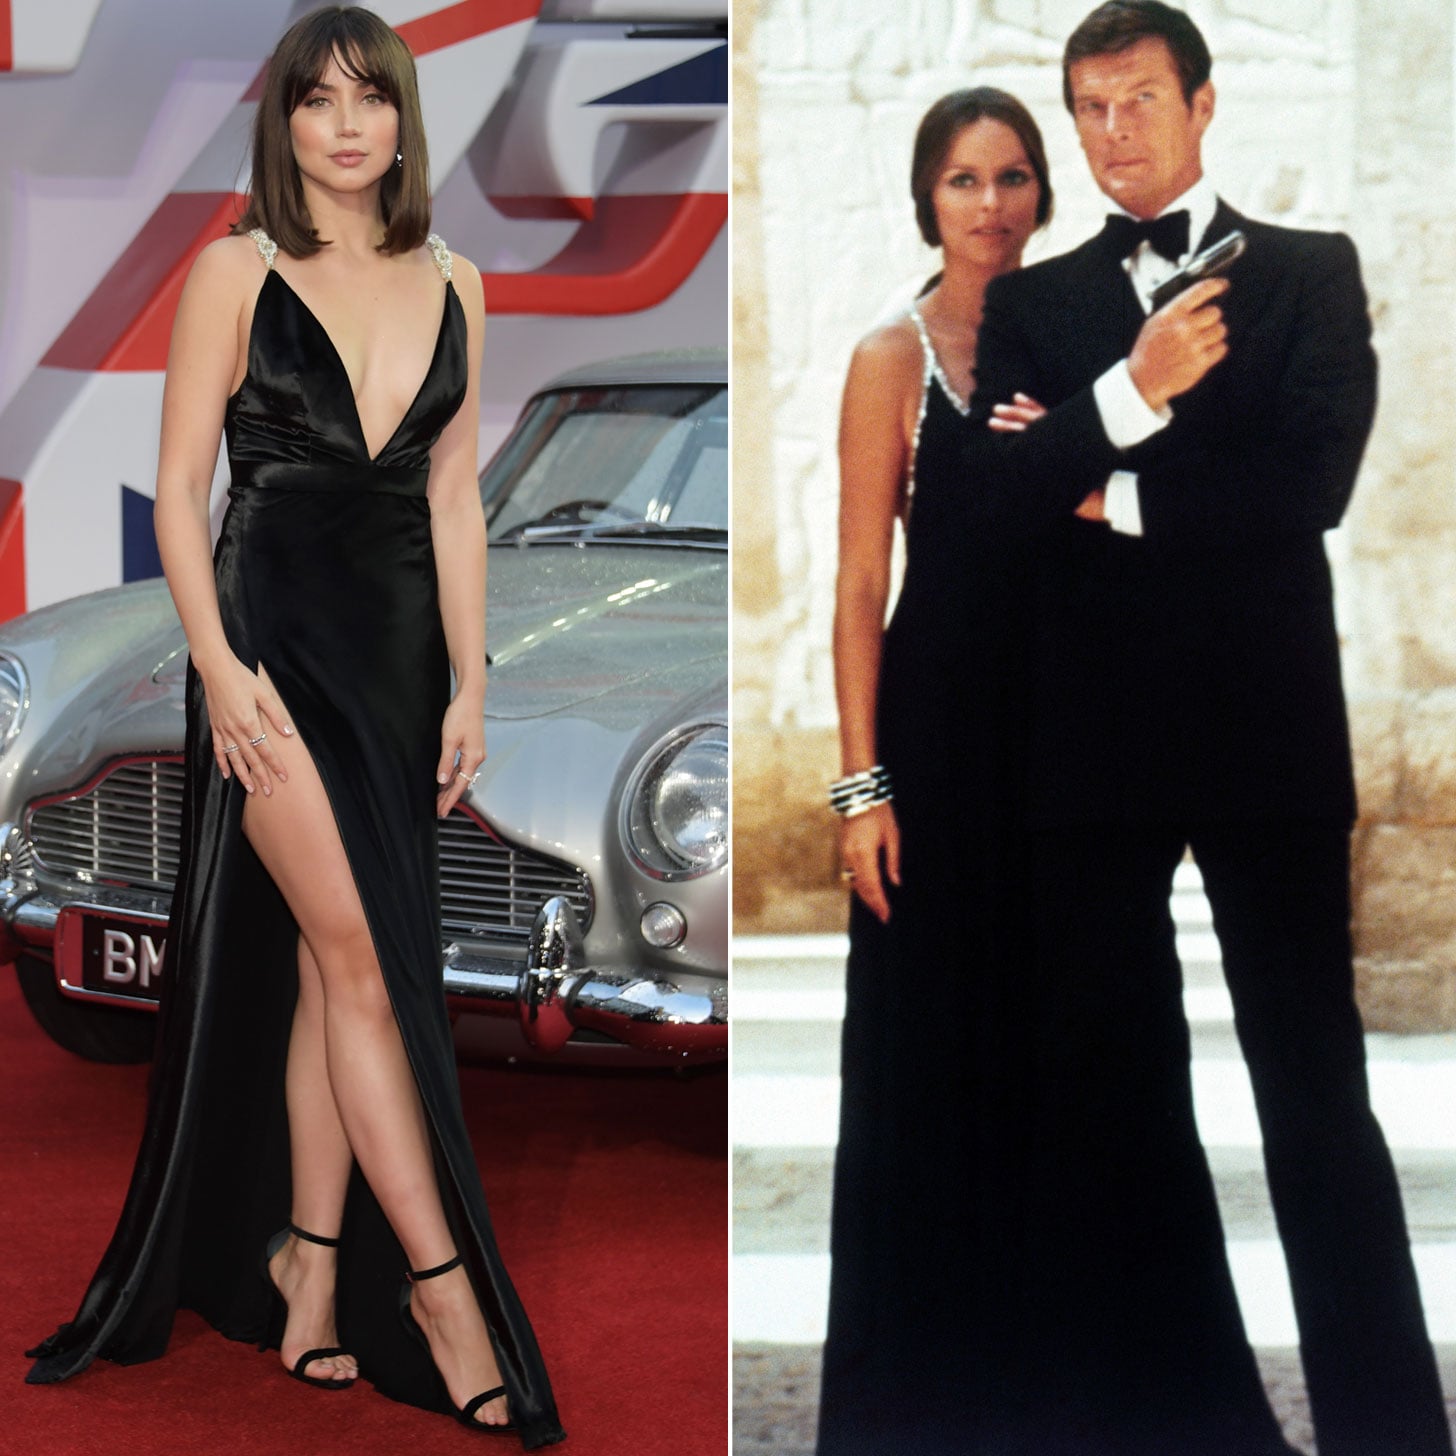 James Bond: No Time To Die Bond girl Ana De Armas might've let